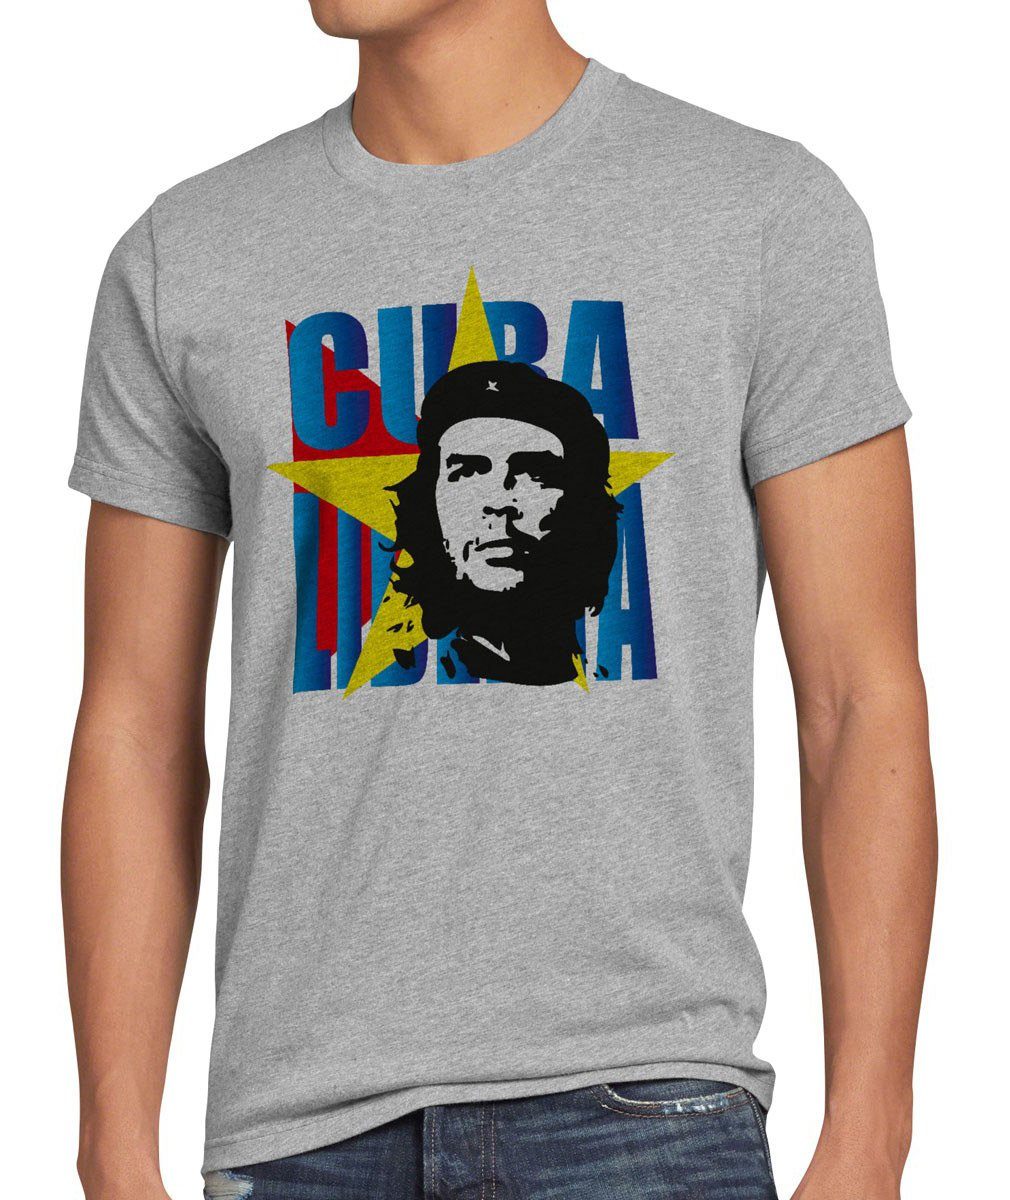 style3 Print-Shirt Herren T-Shirt Che Guevara cuba kuba fidel castro revolution viva havanna top grau meliert